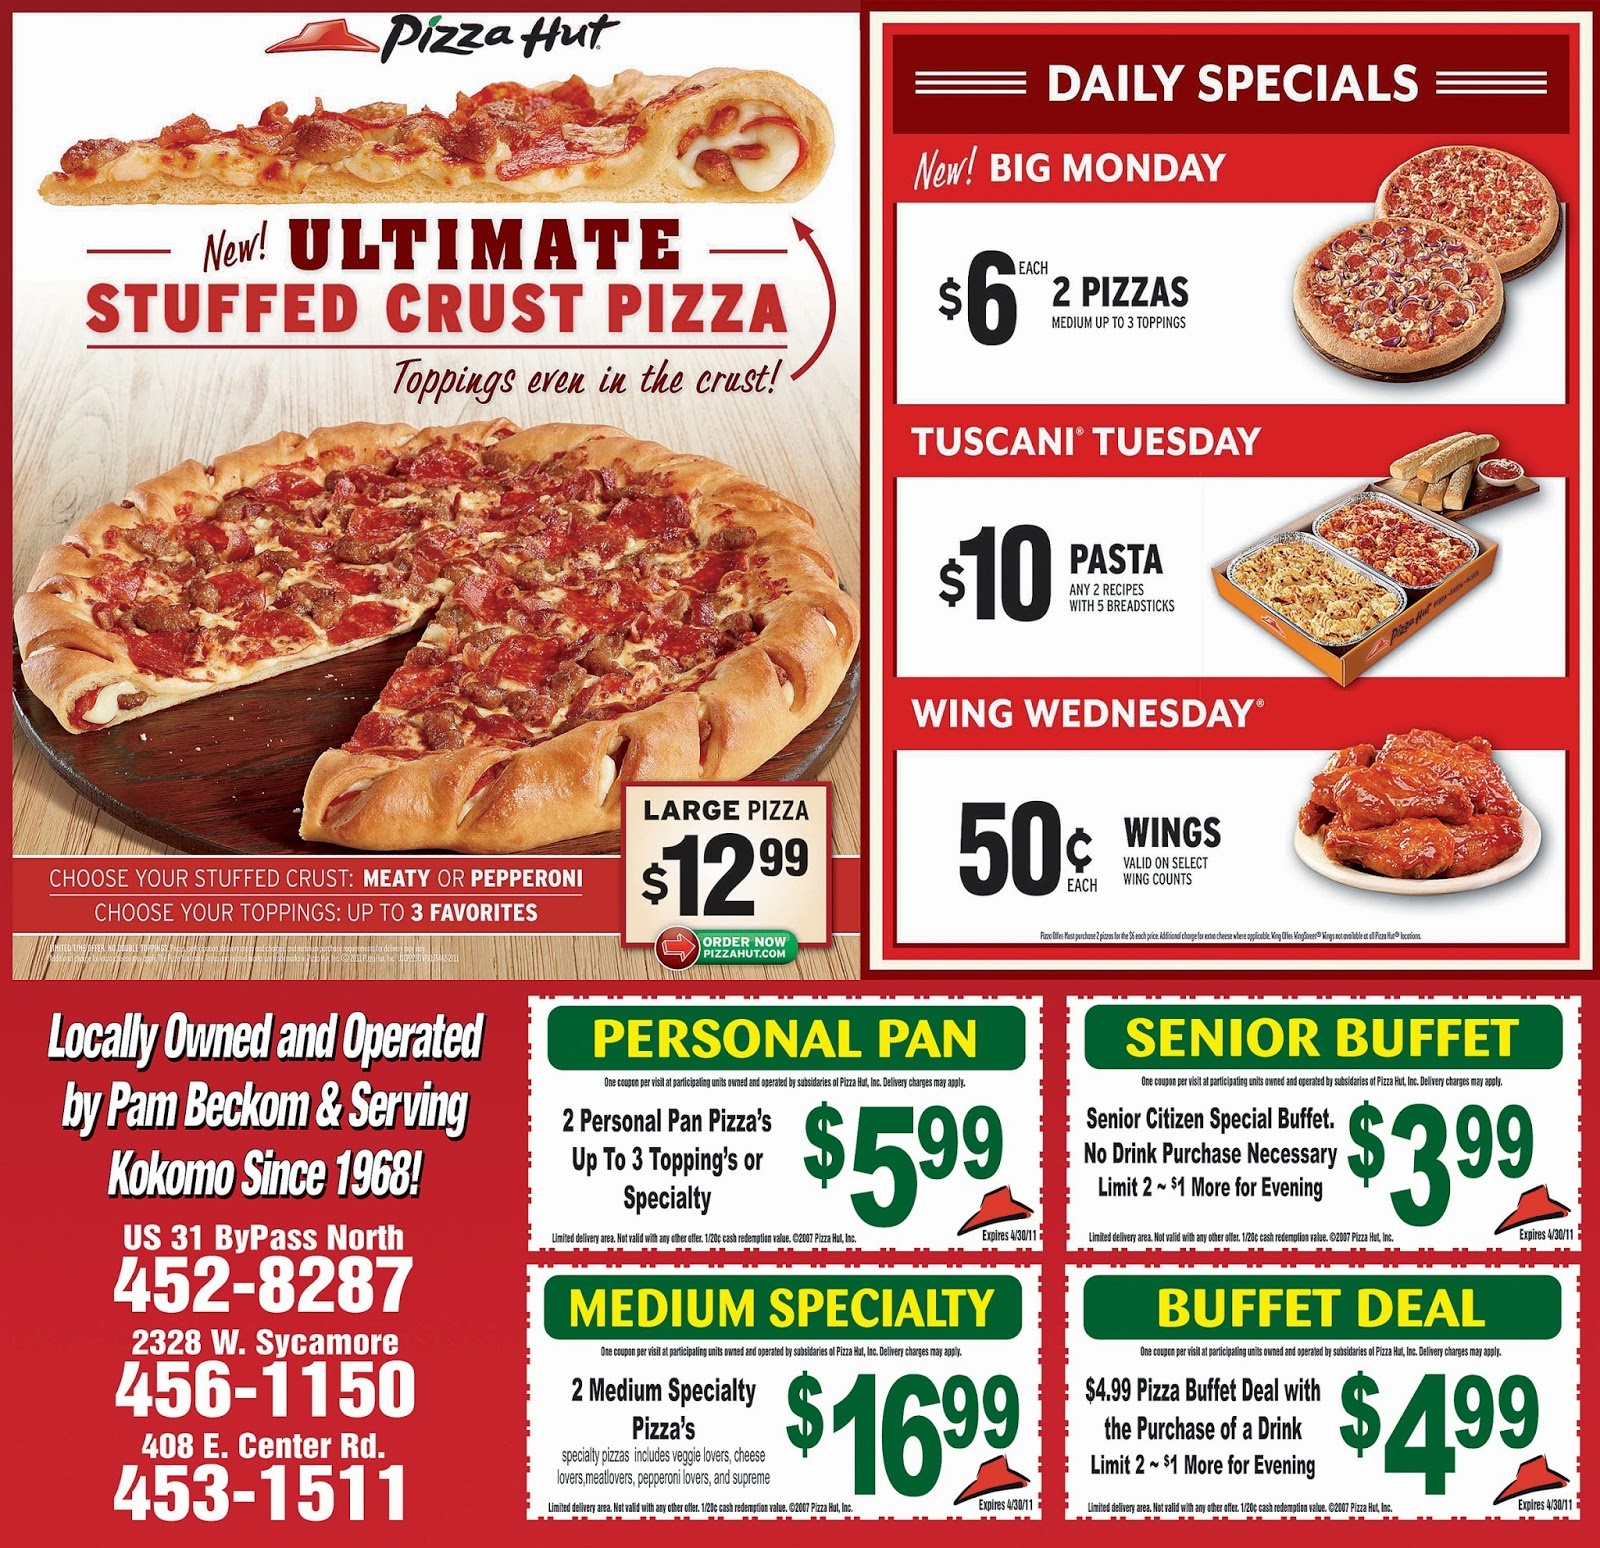 Free Printable Round Table Pizza Coupons Free Printable